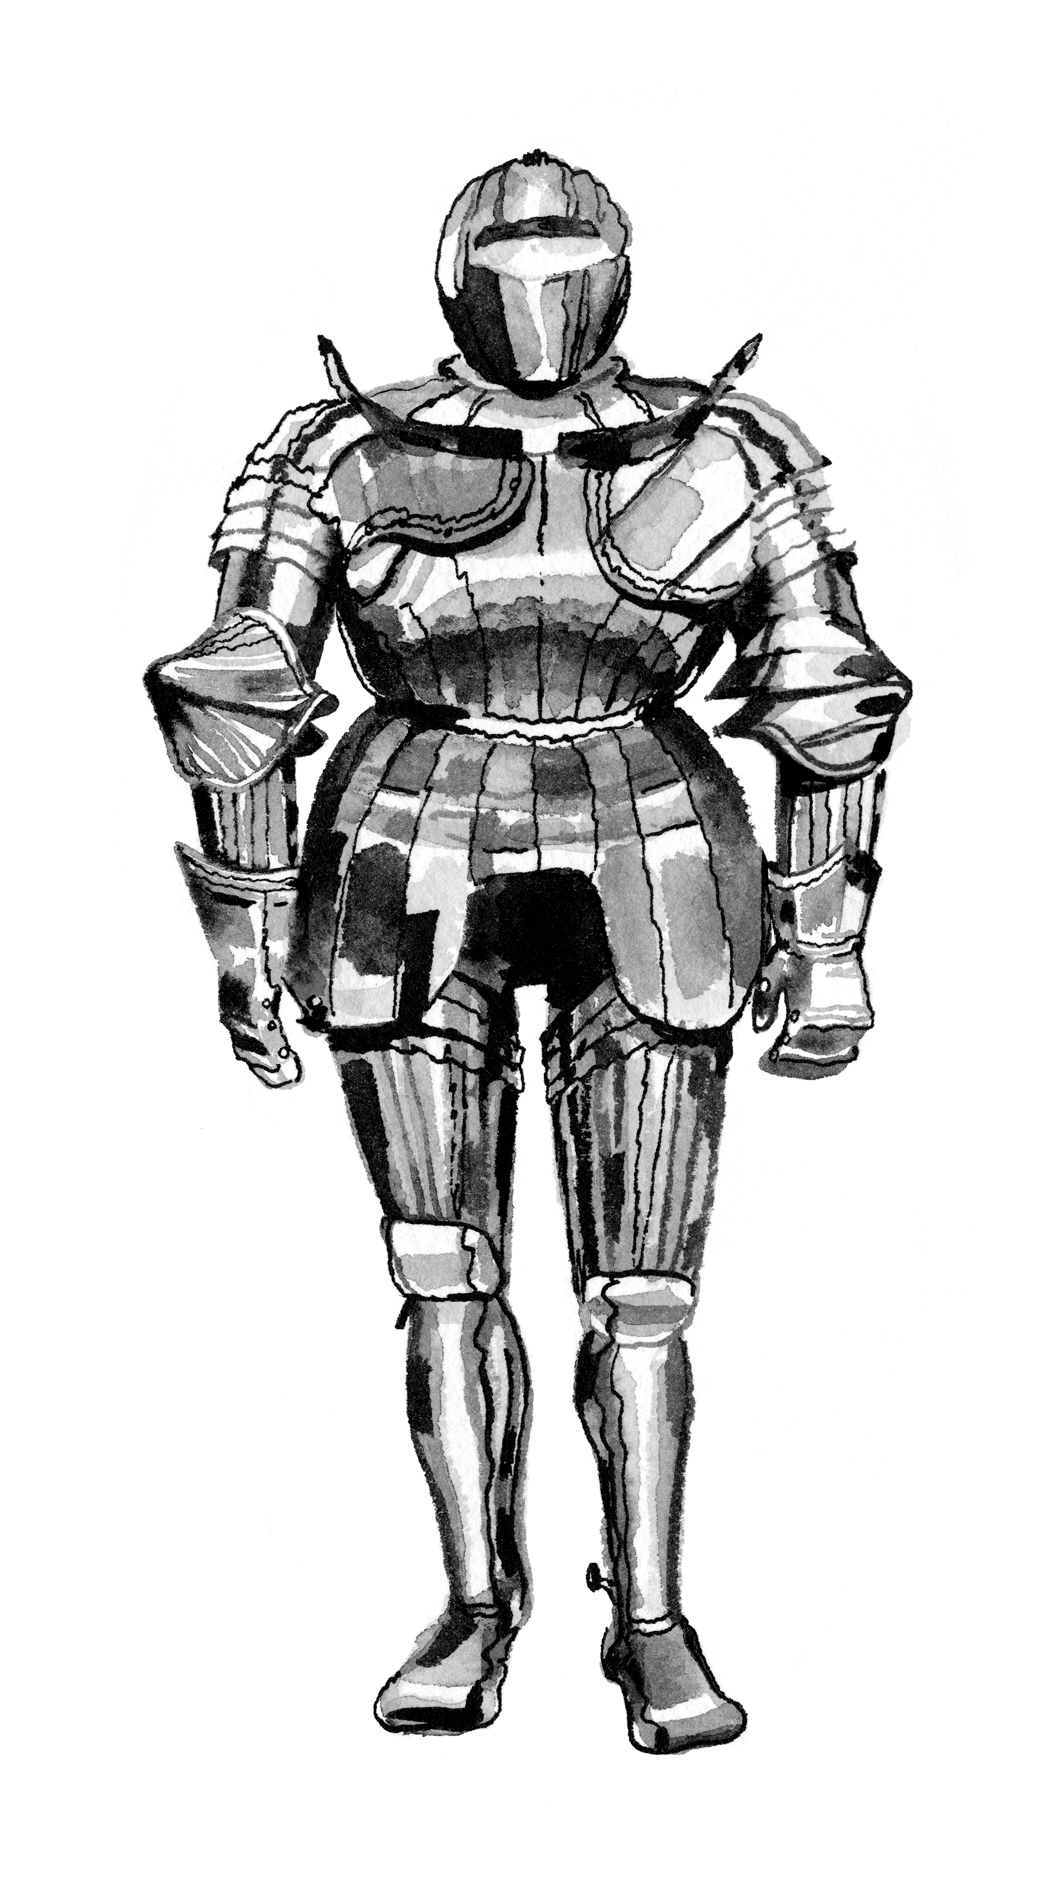 Armor from The Metropolitan Museum of Art